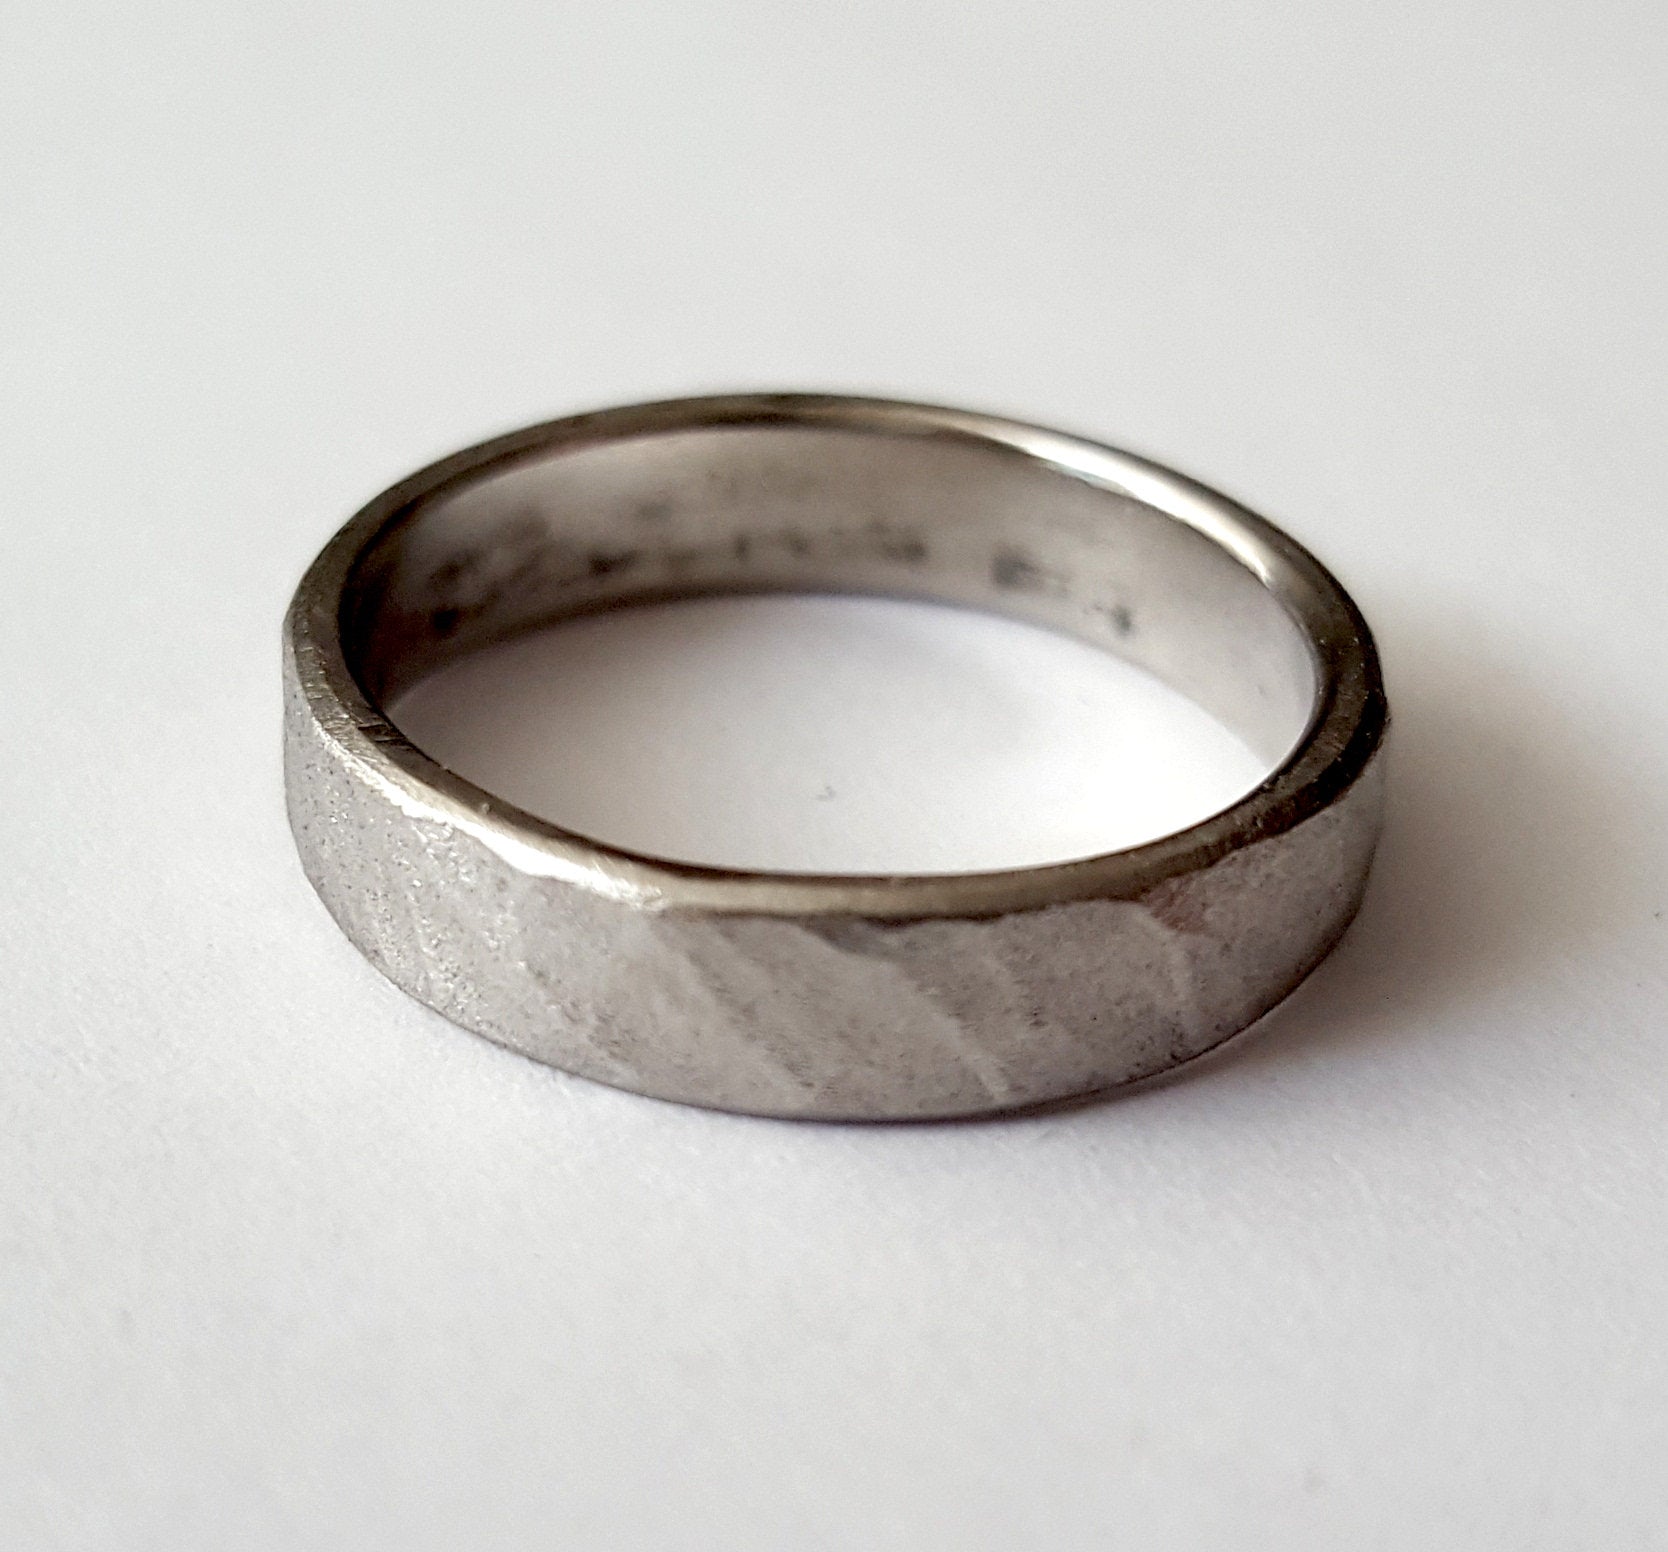 Buy Black Stainless Steel Red Aluminum Inlaid Beveled Wedding Band Ring  Online | INOX Jewelry India - Inox Jewelry India